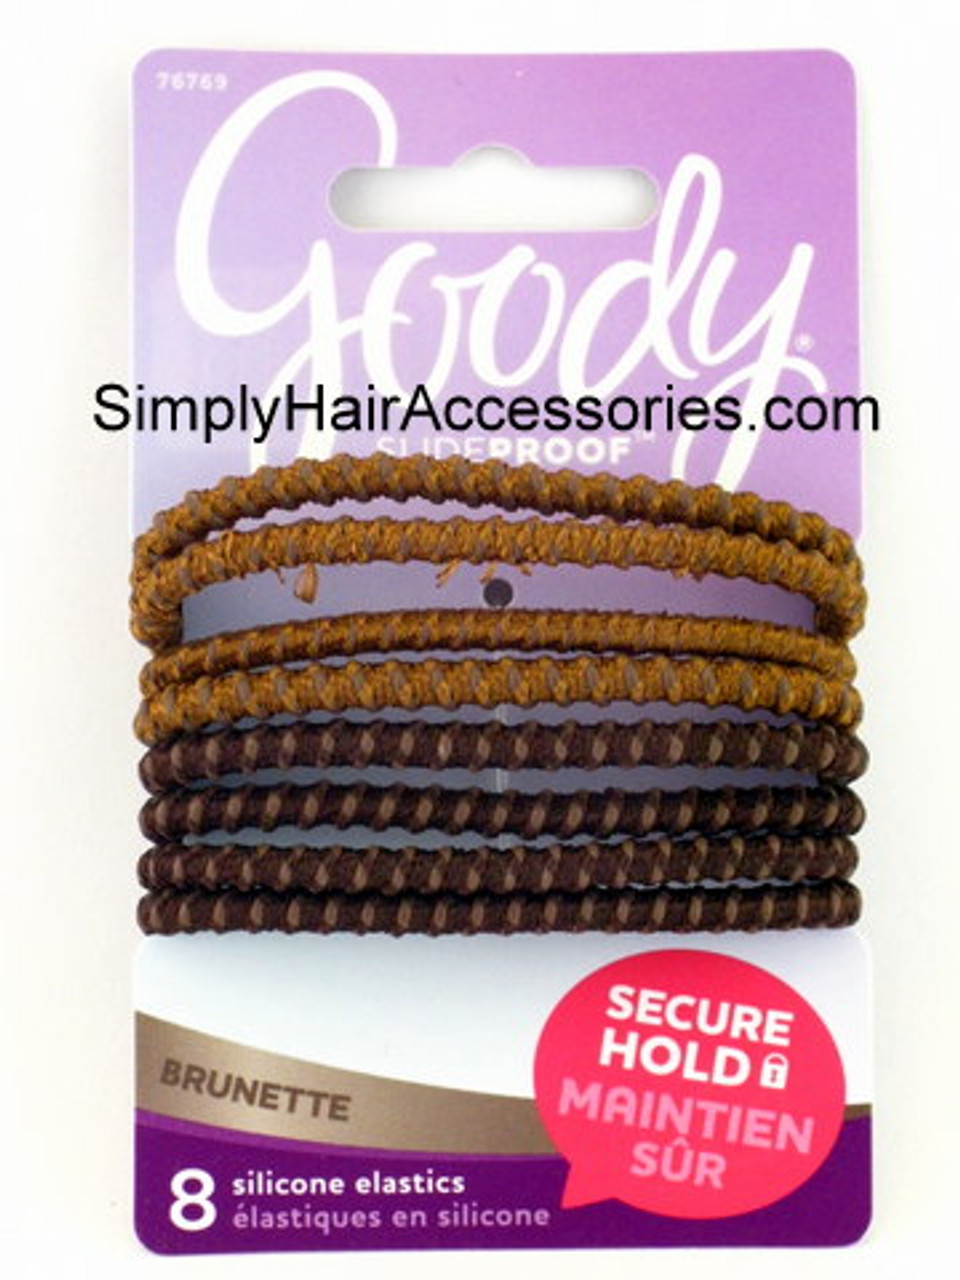 Goody Slideproof Brunette Silicone Hair Elastics - 8 Pcs.